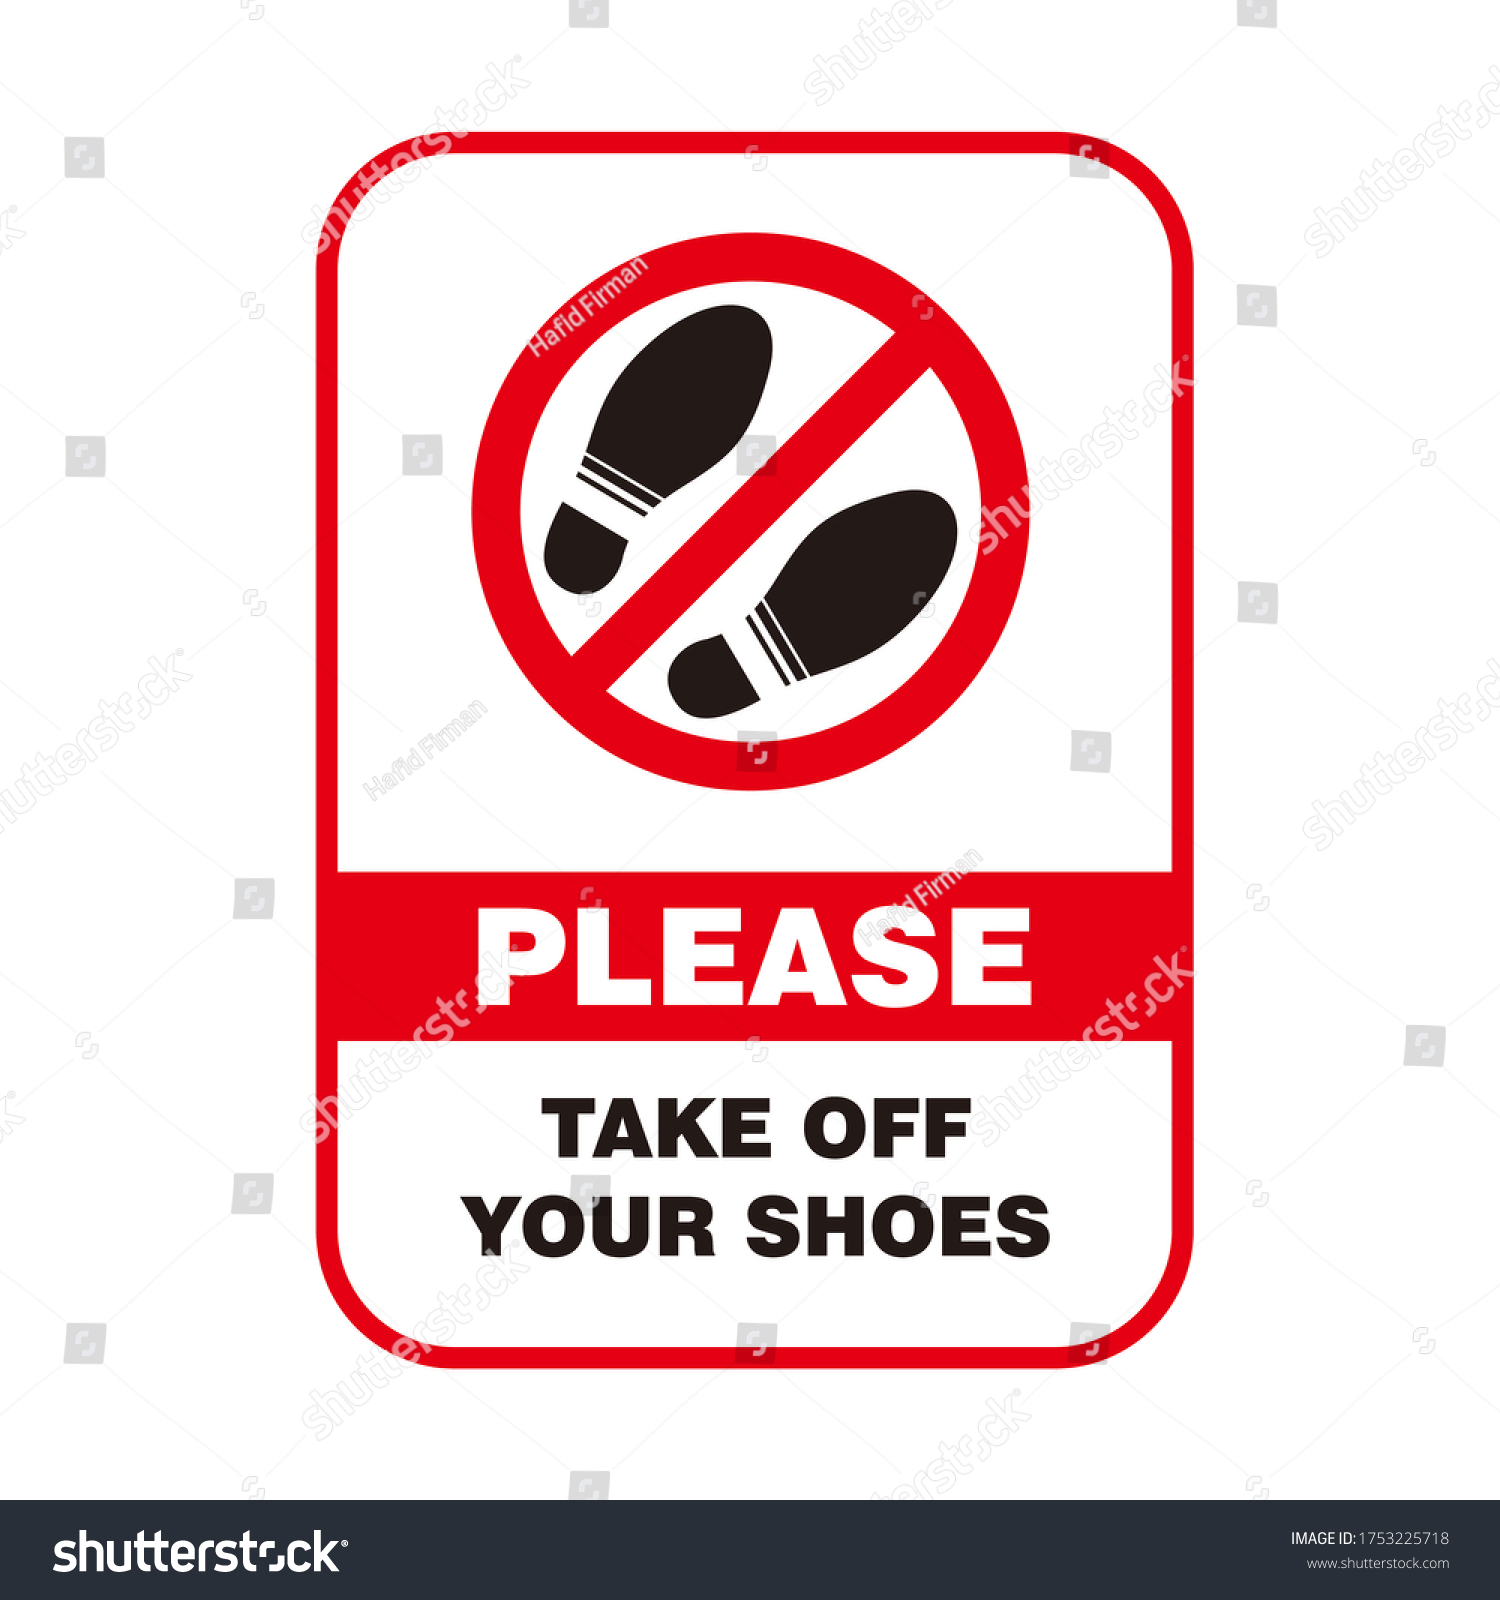 51 Please Remove Footwear Images, Stock Photos & Vectors | Shutterstock